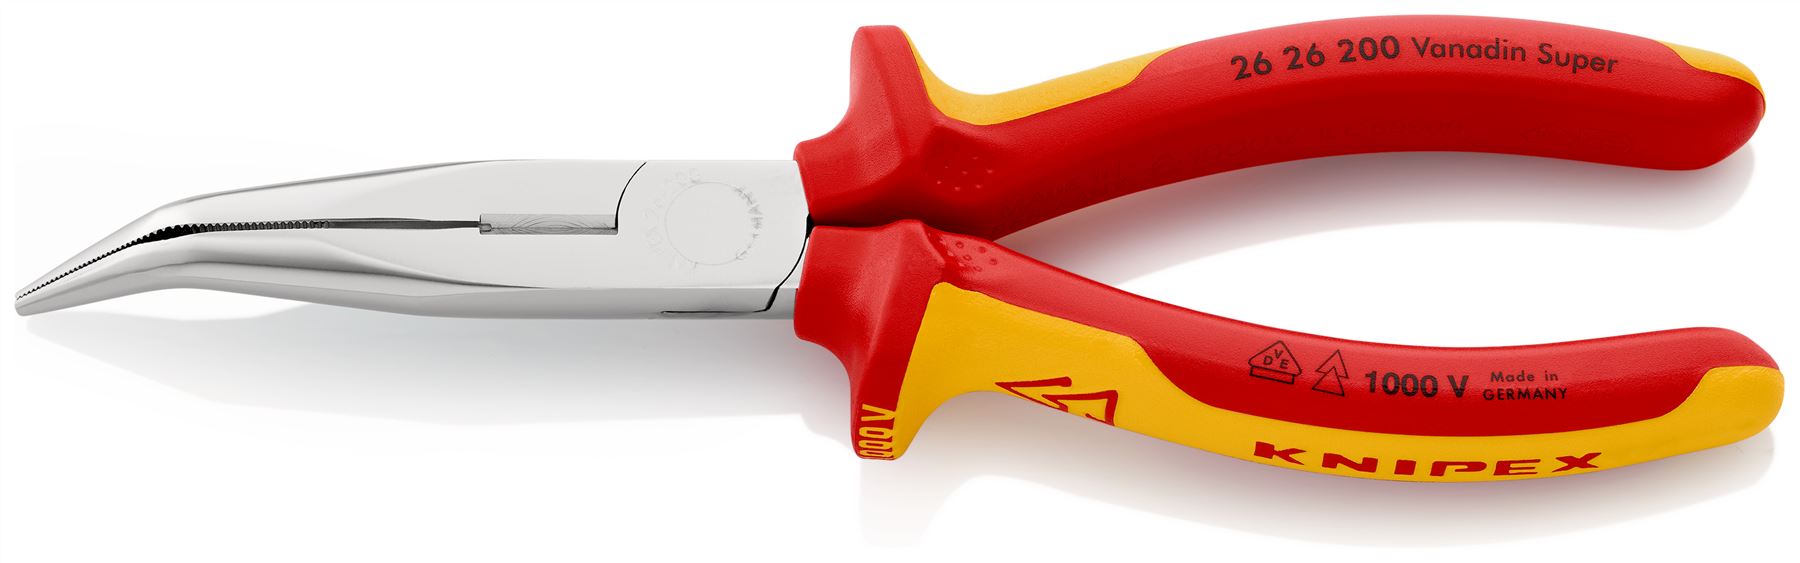 KNIPEX Snipe Nose Side Cutting Pliers Stork Beak Plier Bent Nose 200mm VDE Chrome Multi Component Grips 26 26 200